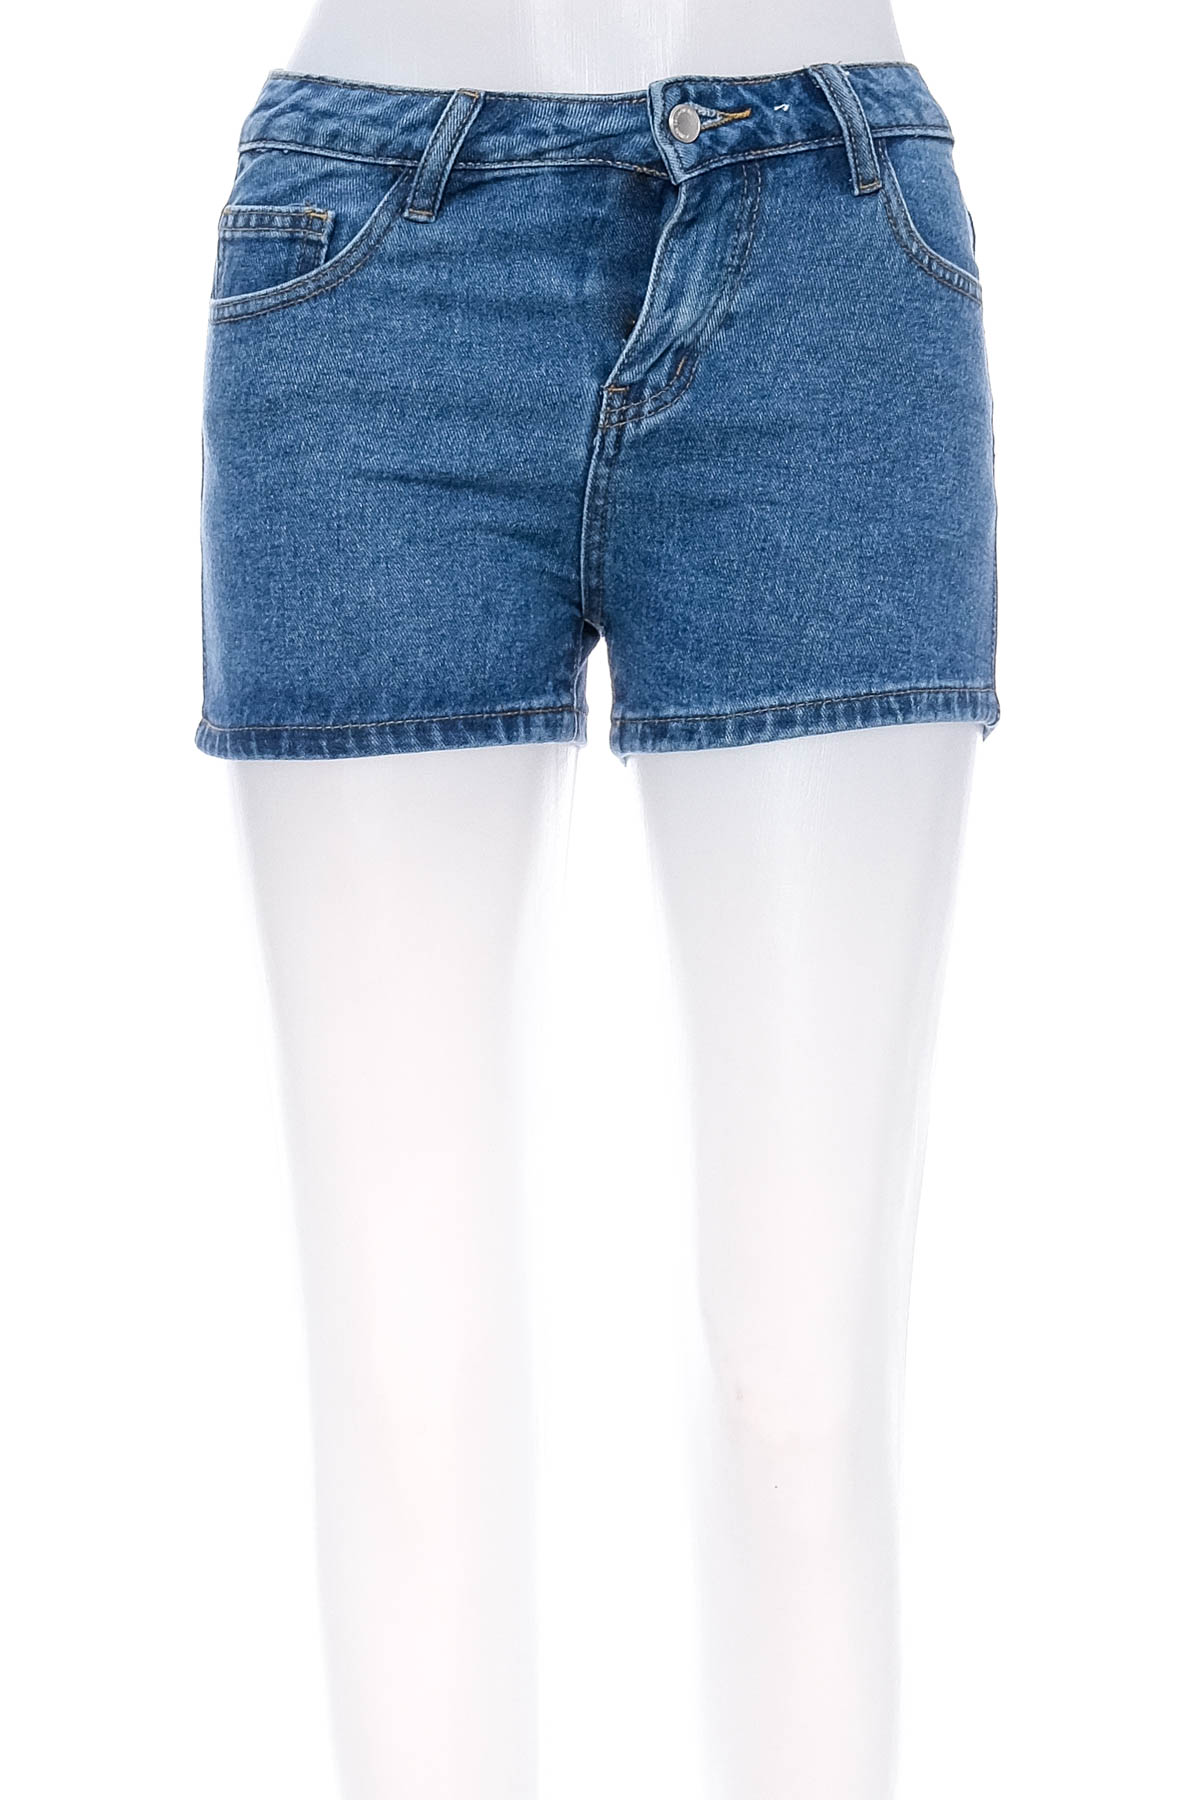 Shorts for girls - 0